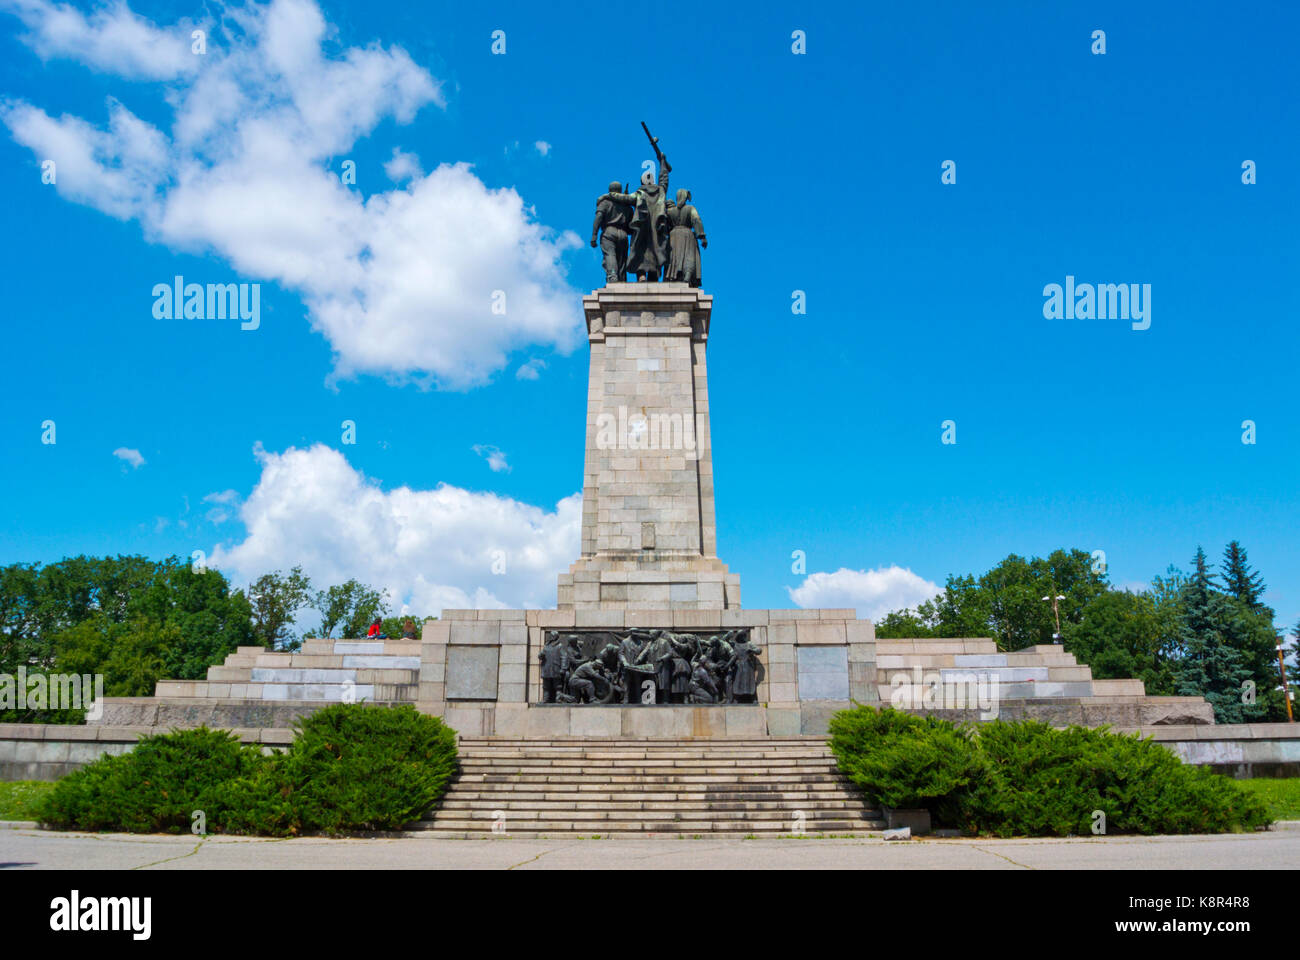 Pametnik na Savetskata armia, Monument to the Soviet Army, from 1954, Knyazheska Garden, Sofia, Bulgaria Stock Photo